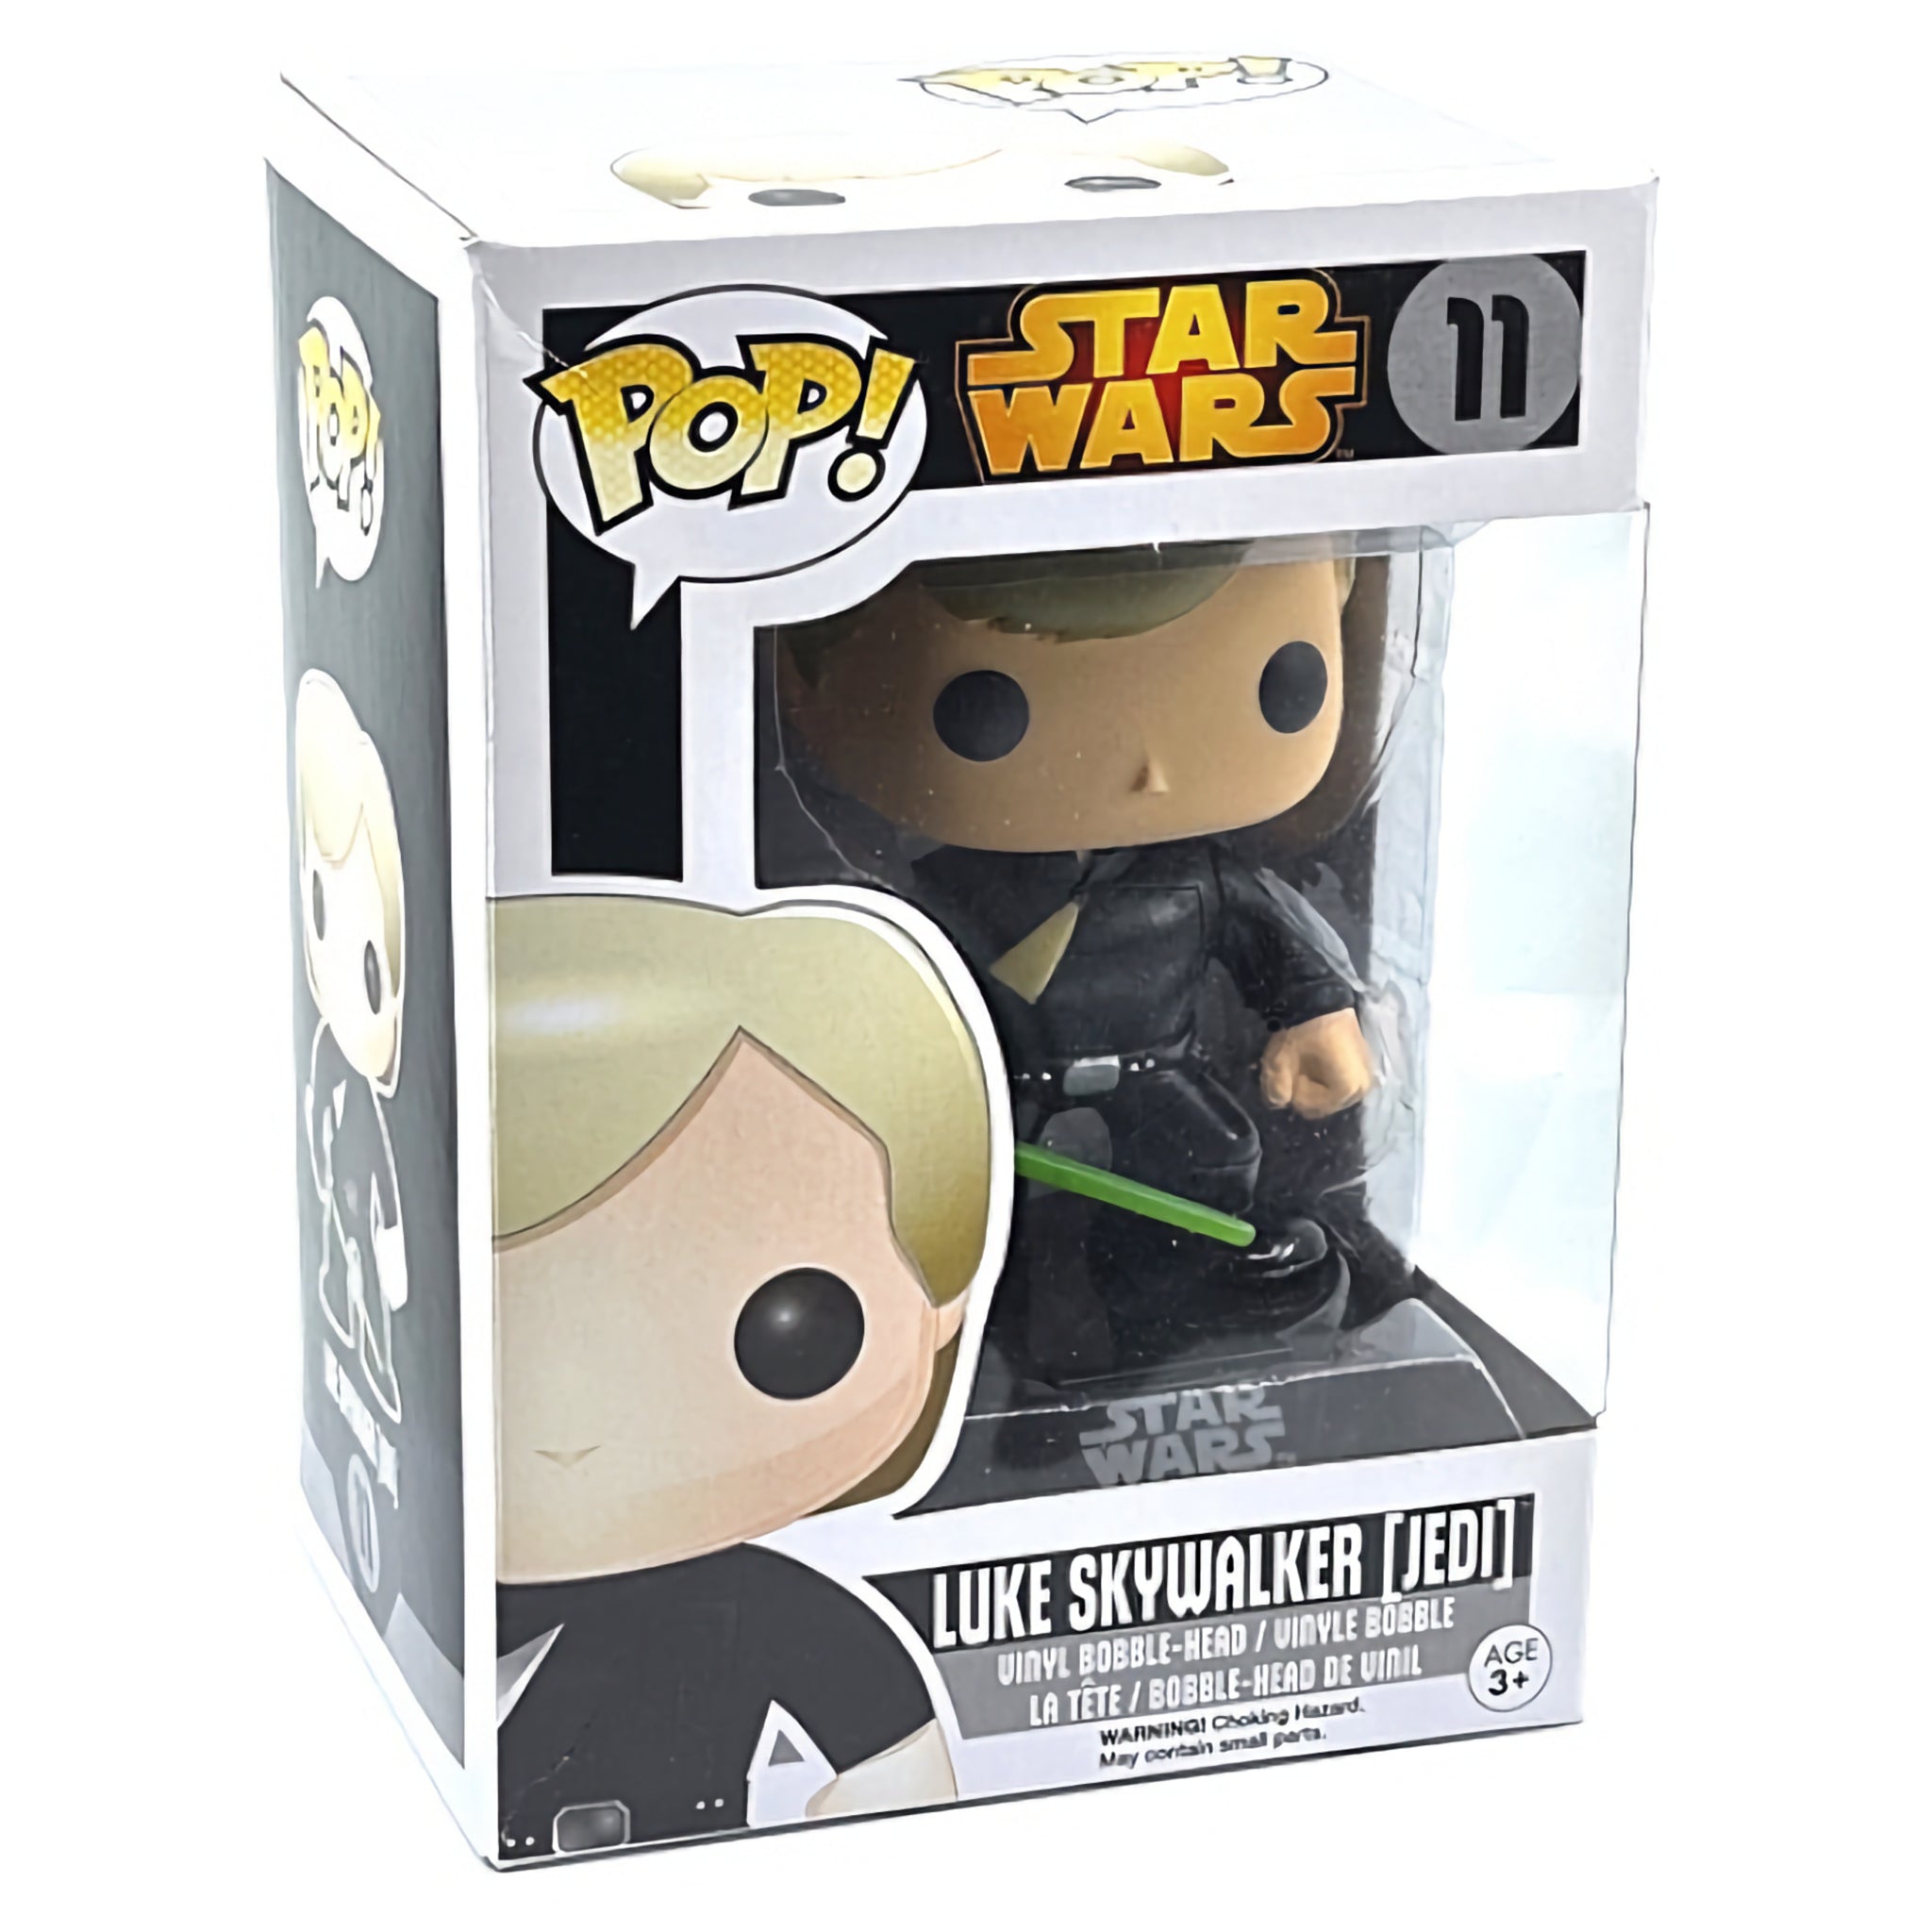 Luke Skywalker (Jedi) (Vault Edition) Funko Pop!